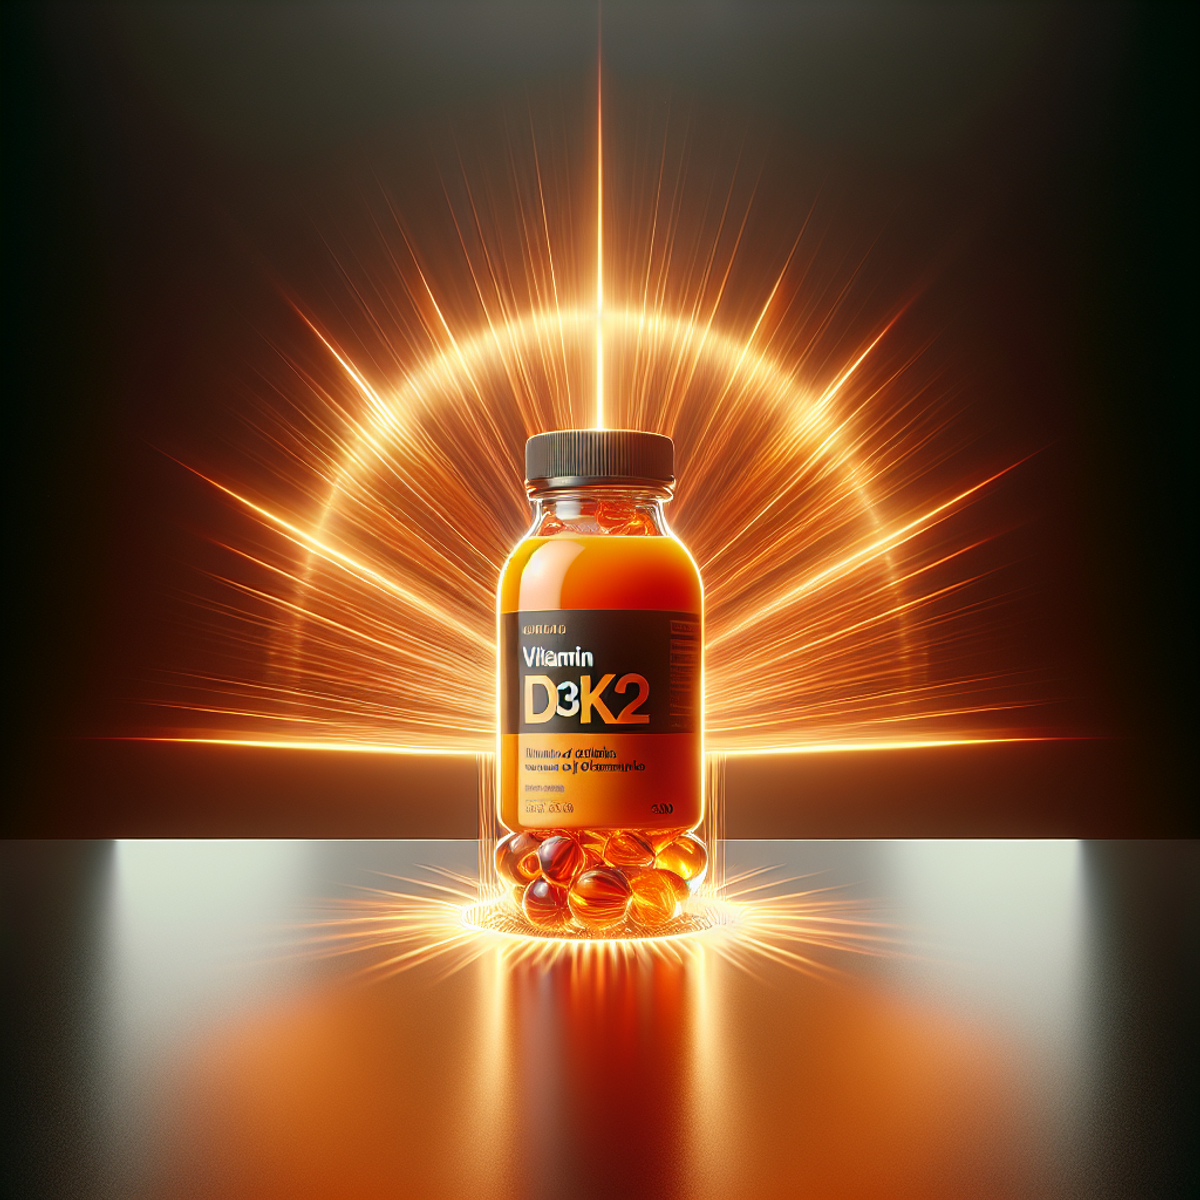 A vibrant orange bottle containing Vitamin D3 K2 5000 I.E. with sunlight rays illuminating it.